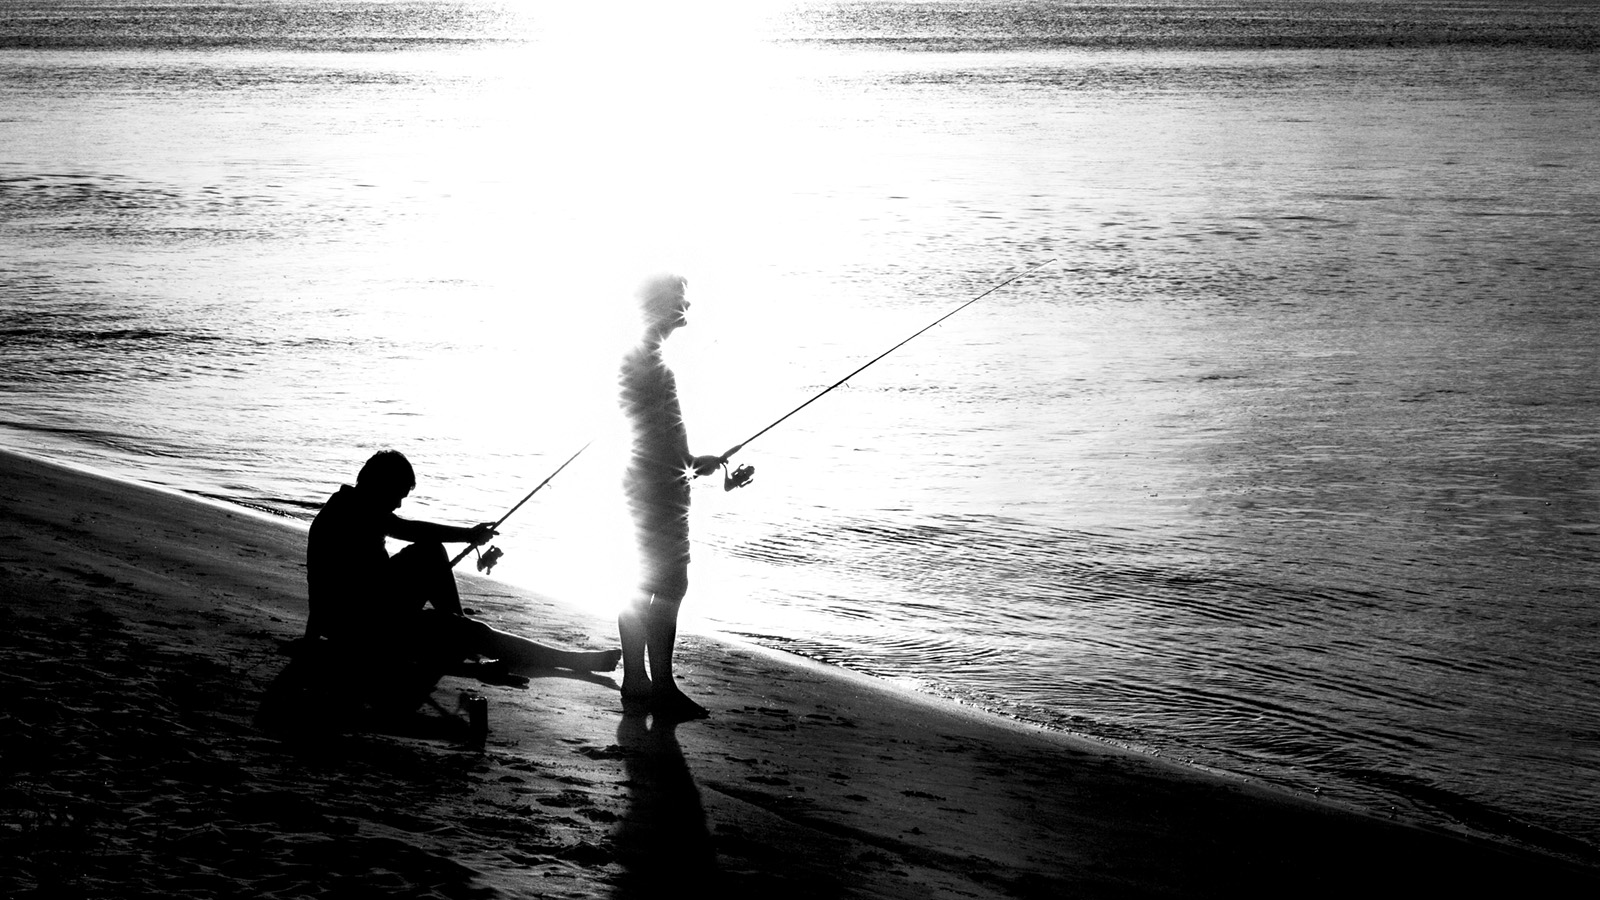 OTA HALBICH - Fisherman or not